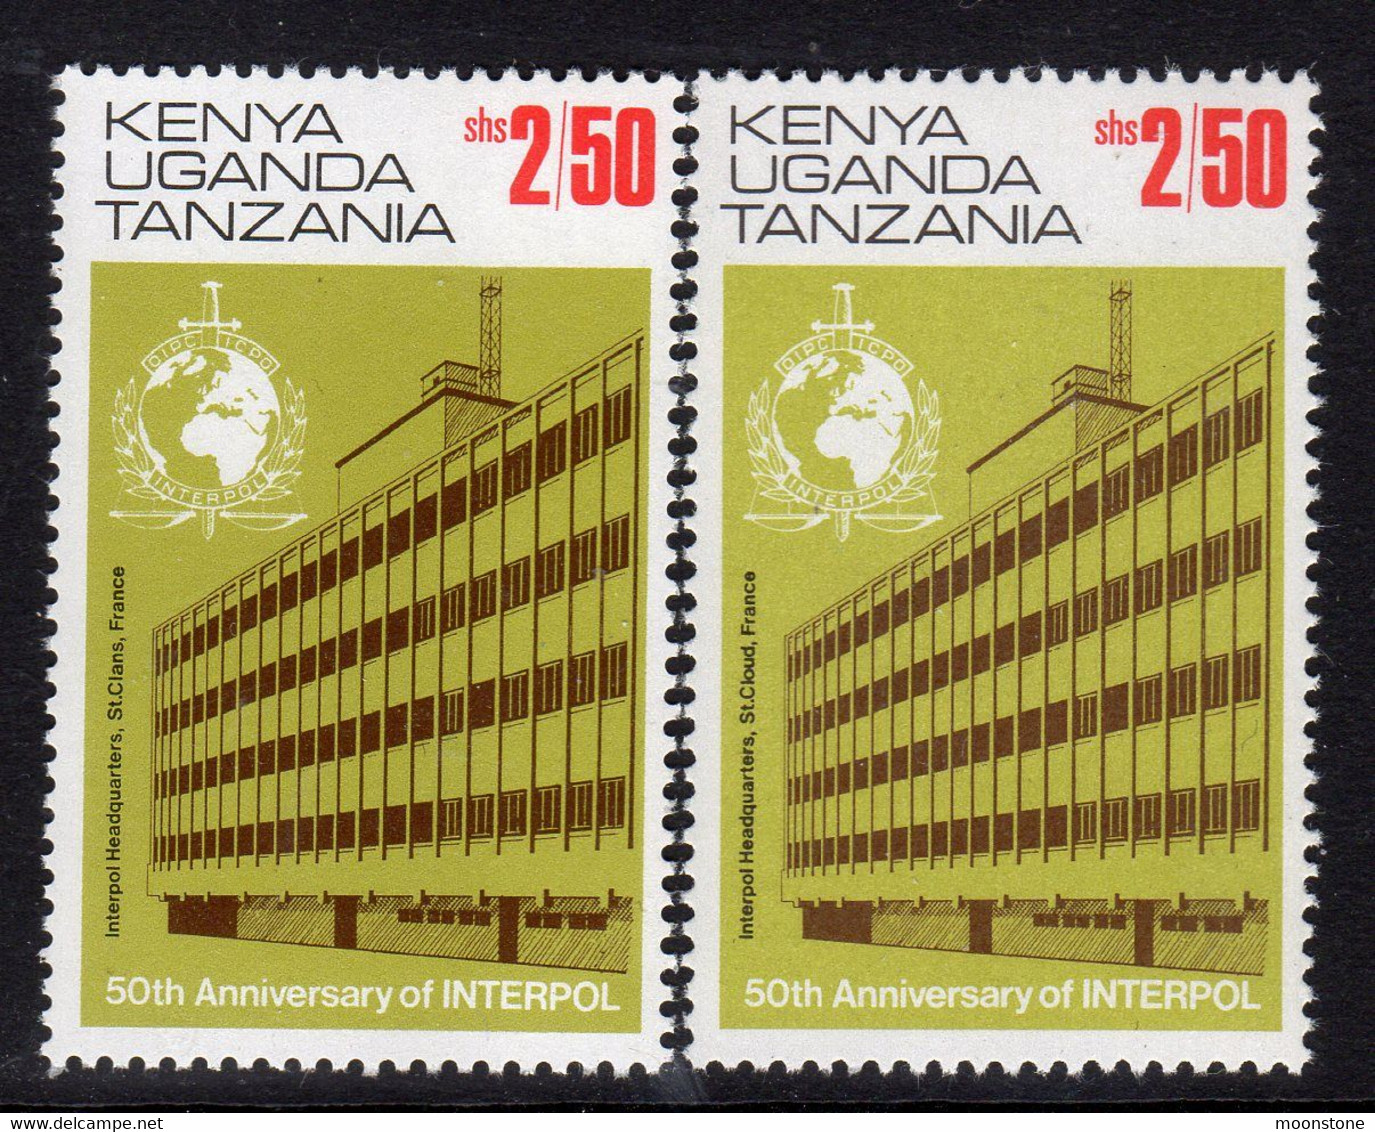 Kenya, Uganda & Tanzania 1973 50th Anniversary Of Interpol, Both 2/50 Values, MNH, SG 341/2 (BA2) - Kenya, Uganda & Tanzania